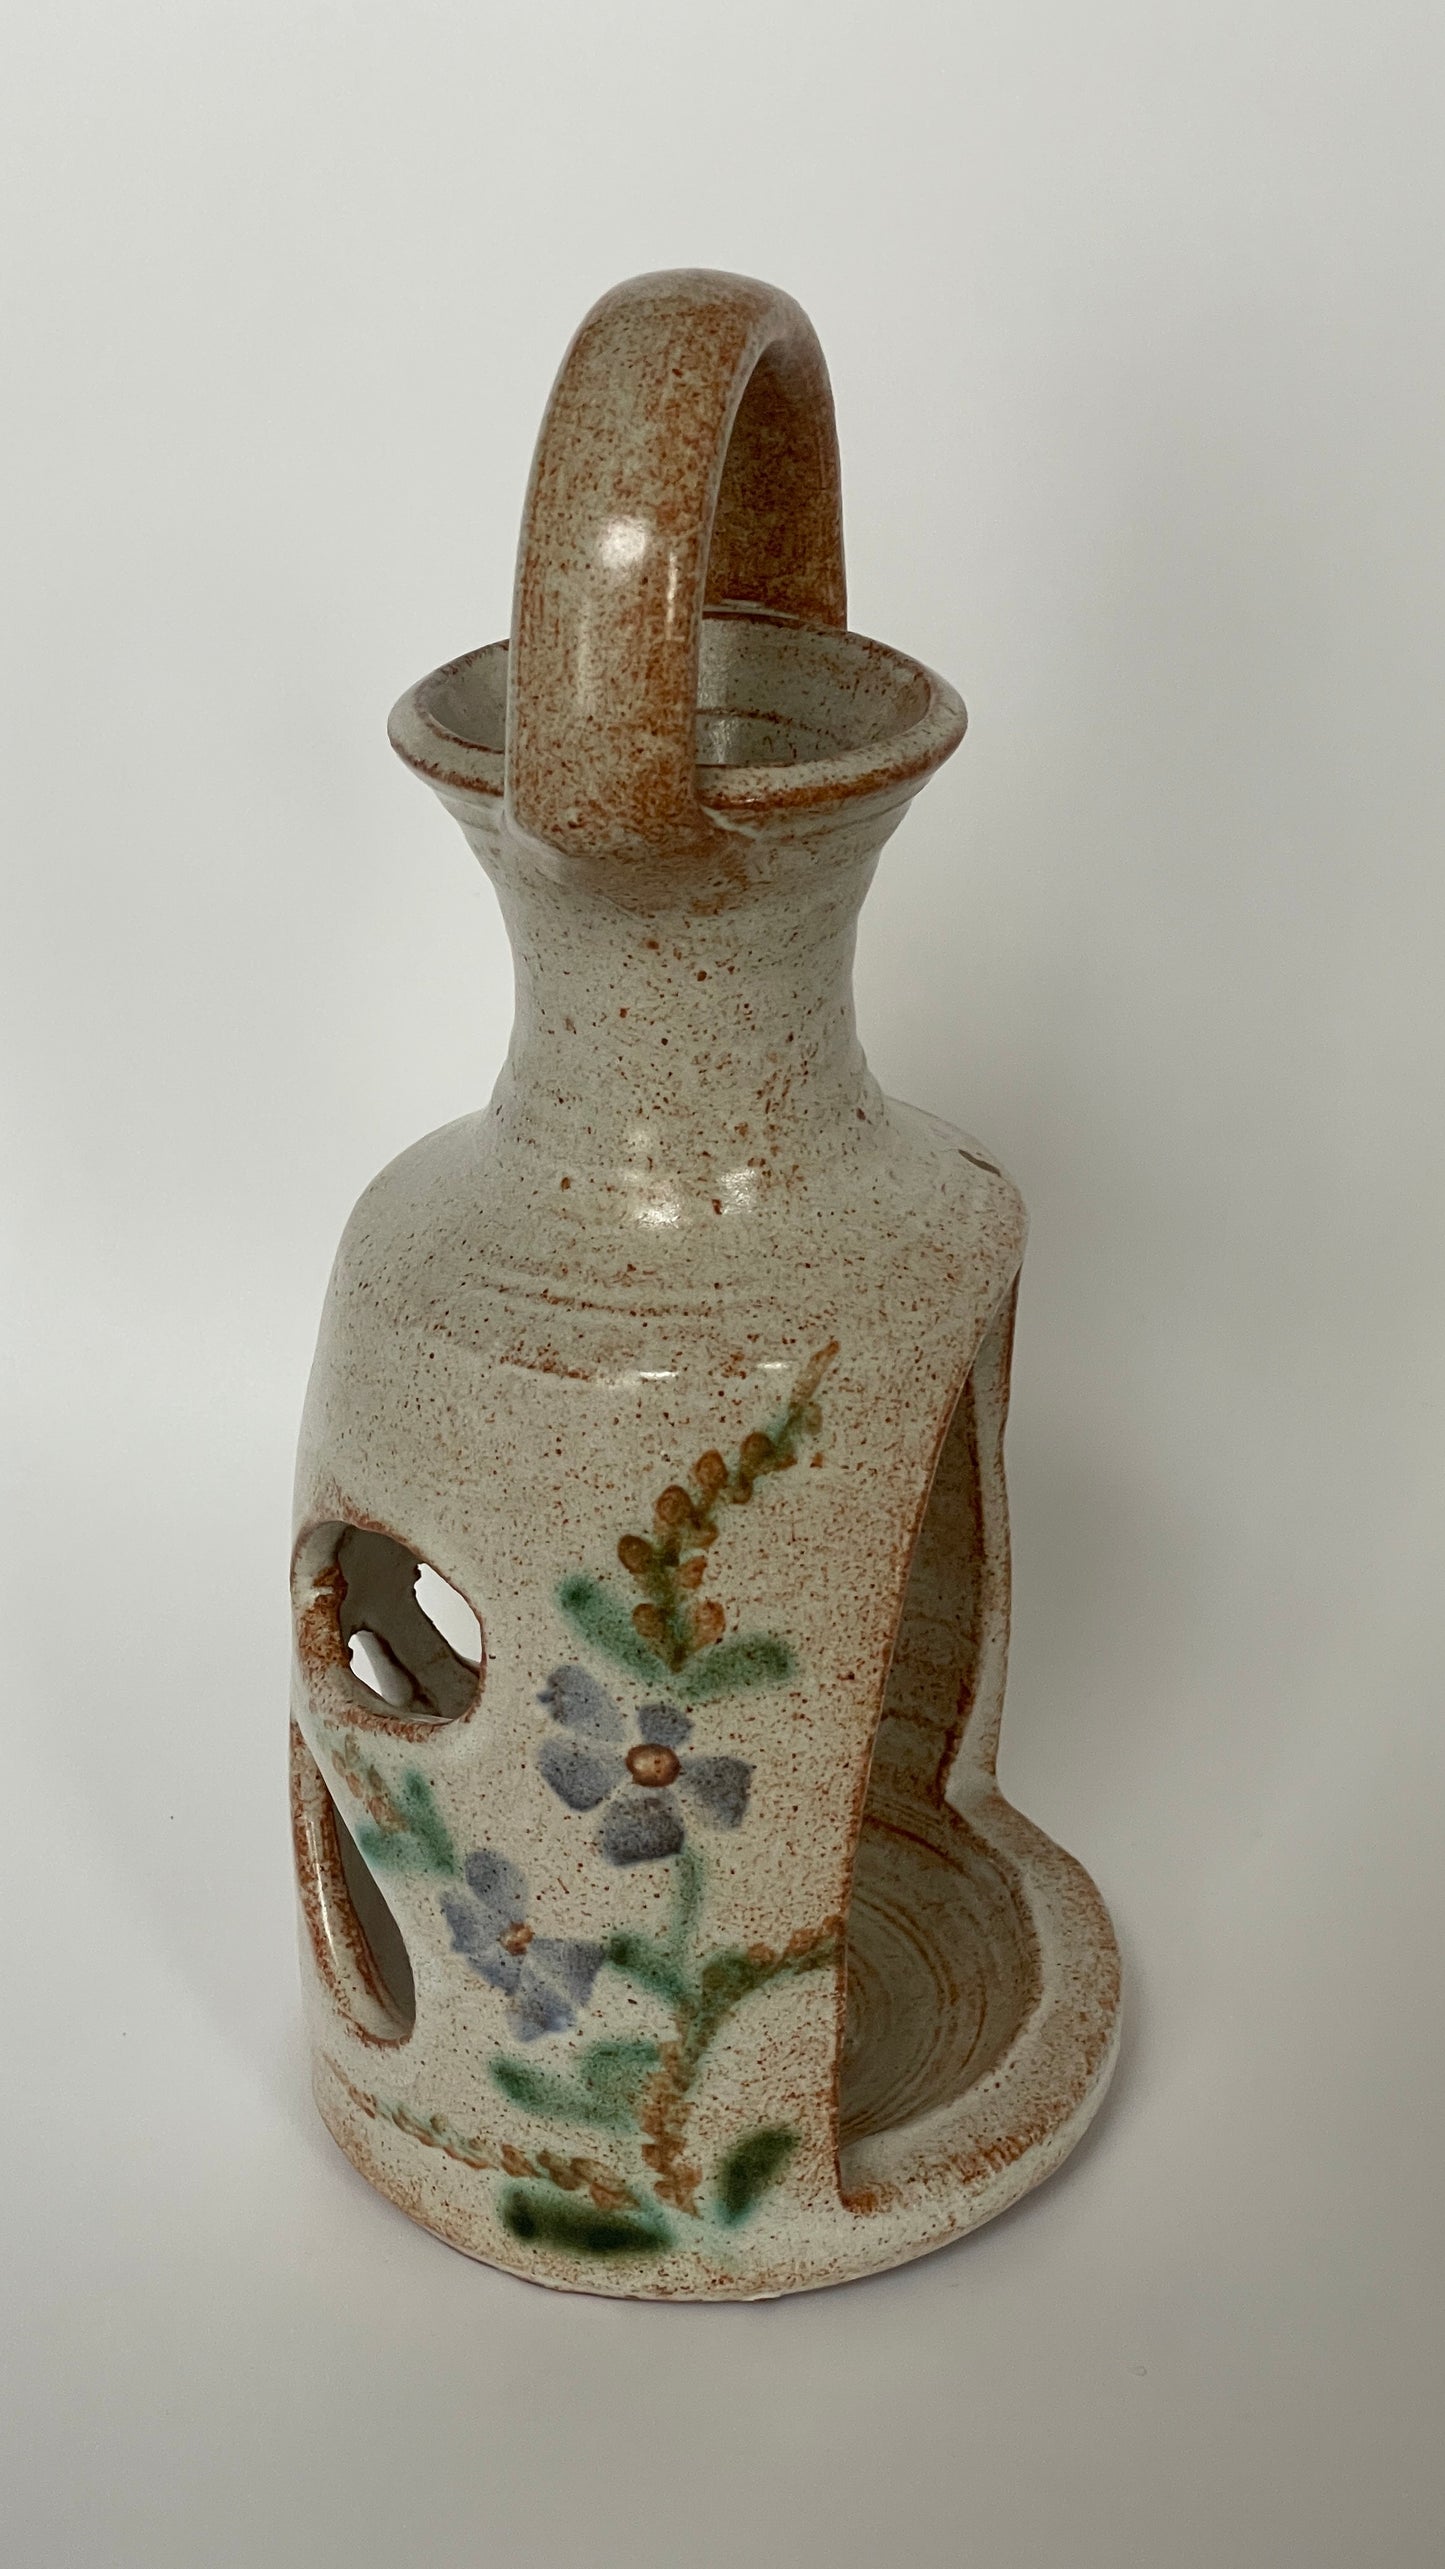 Ceramic lantern